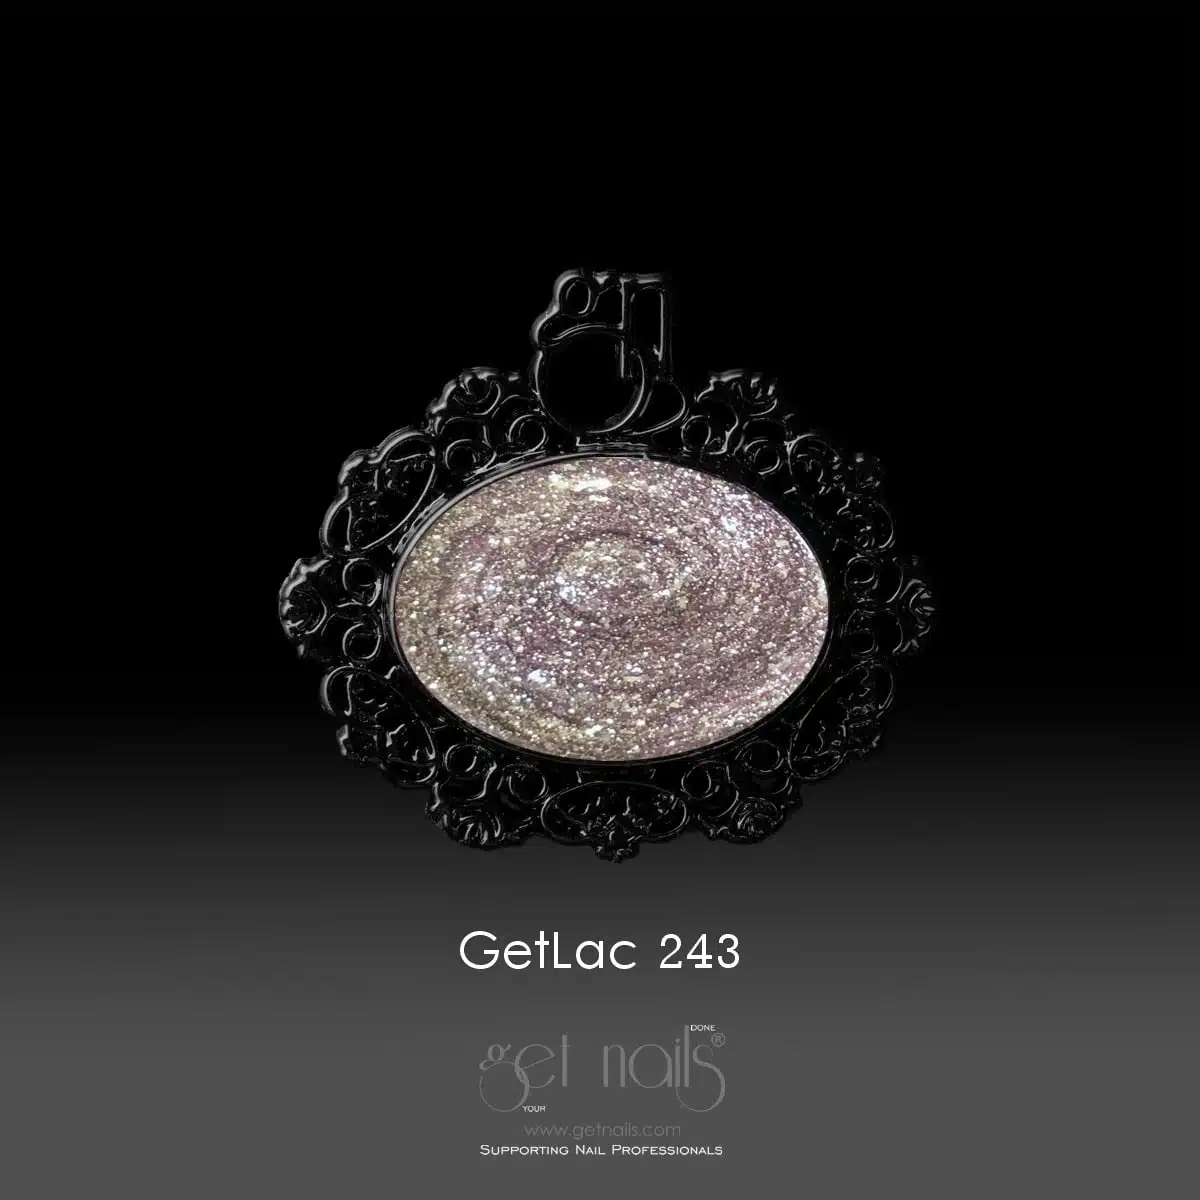 Get Nails Austria - GetLac 243 Brilliant Rose Gold 15 g